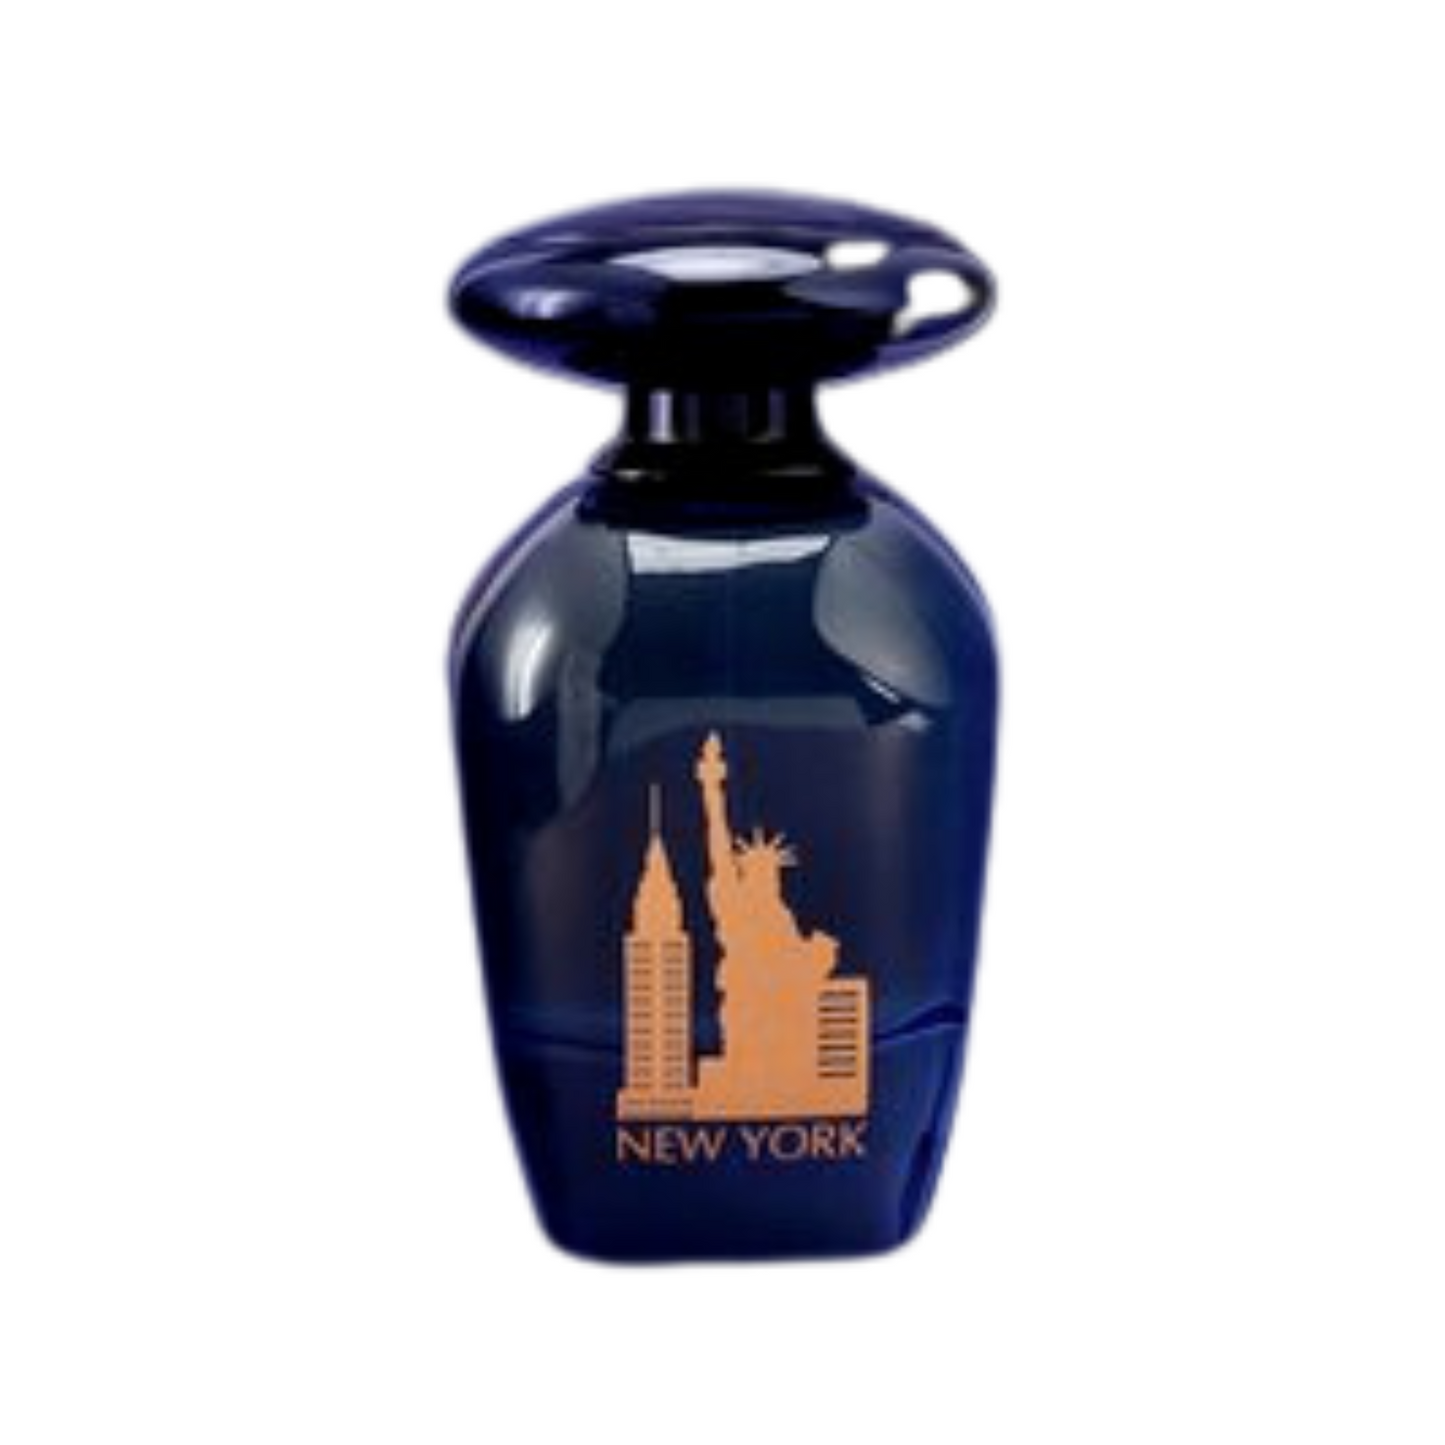 Perfume unisex L'orientale Fragrances Night De Paris NEW YORK 100ml EDP